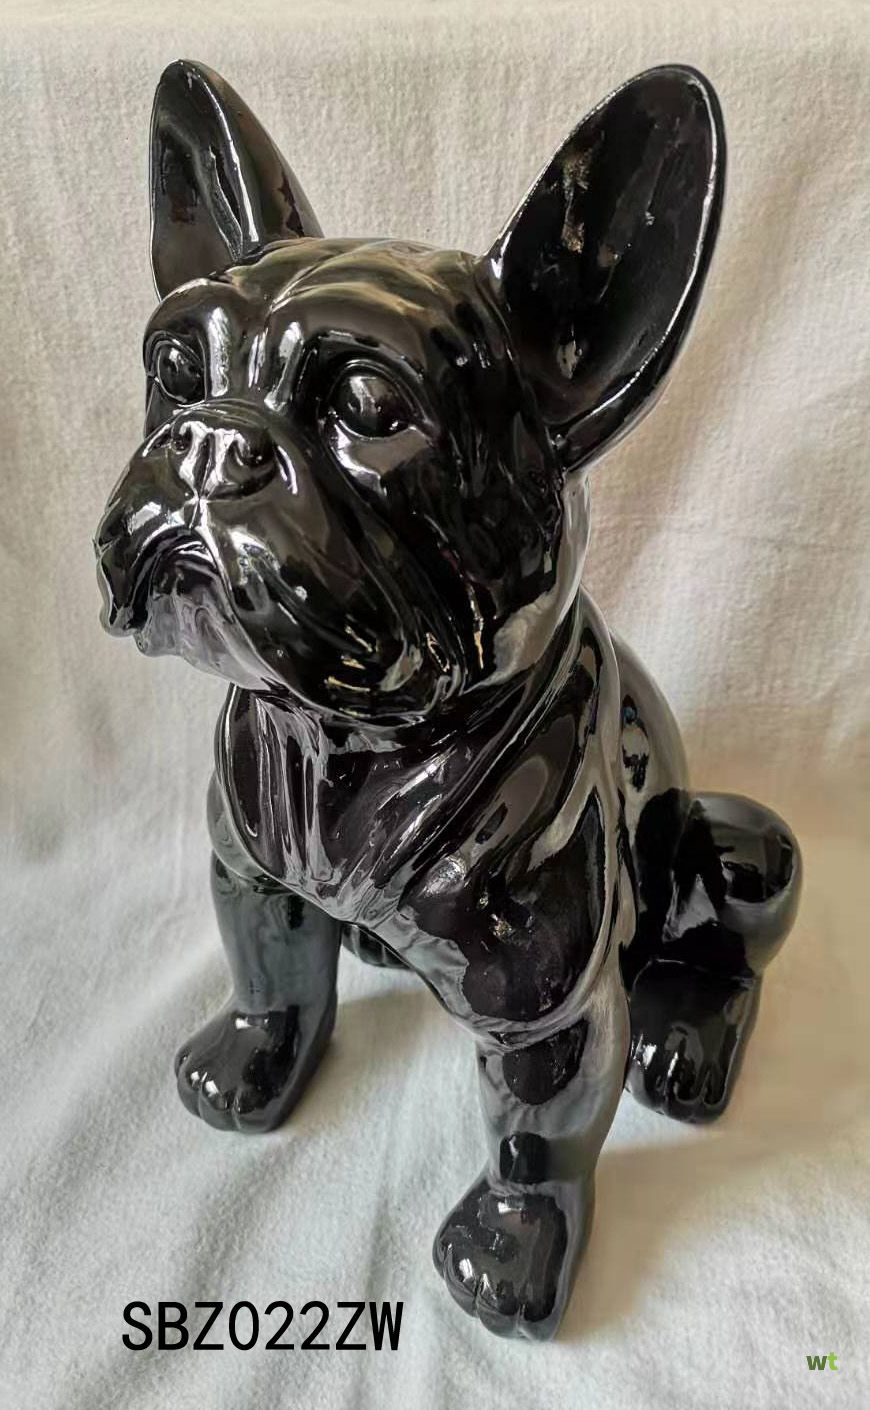 professioneel Cirkel Maand Hond franse bulldog zwart 37 cm beeld Stoobz